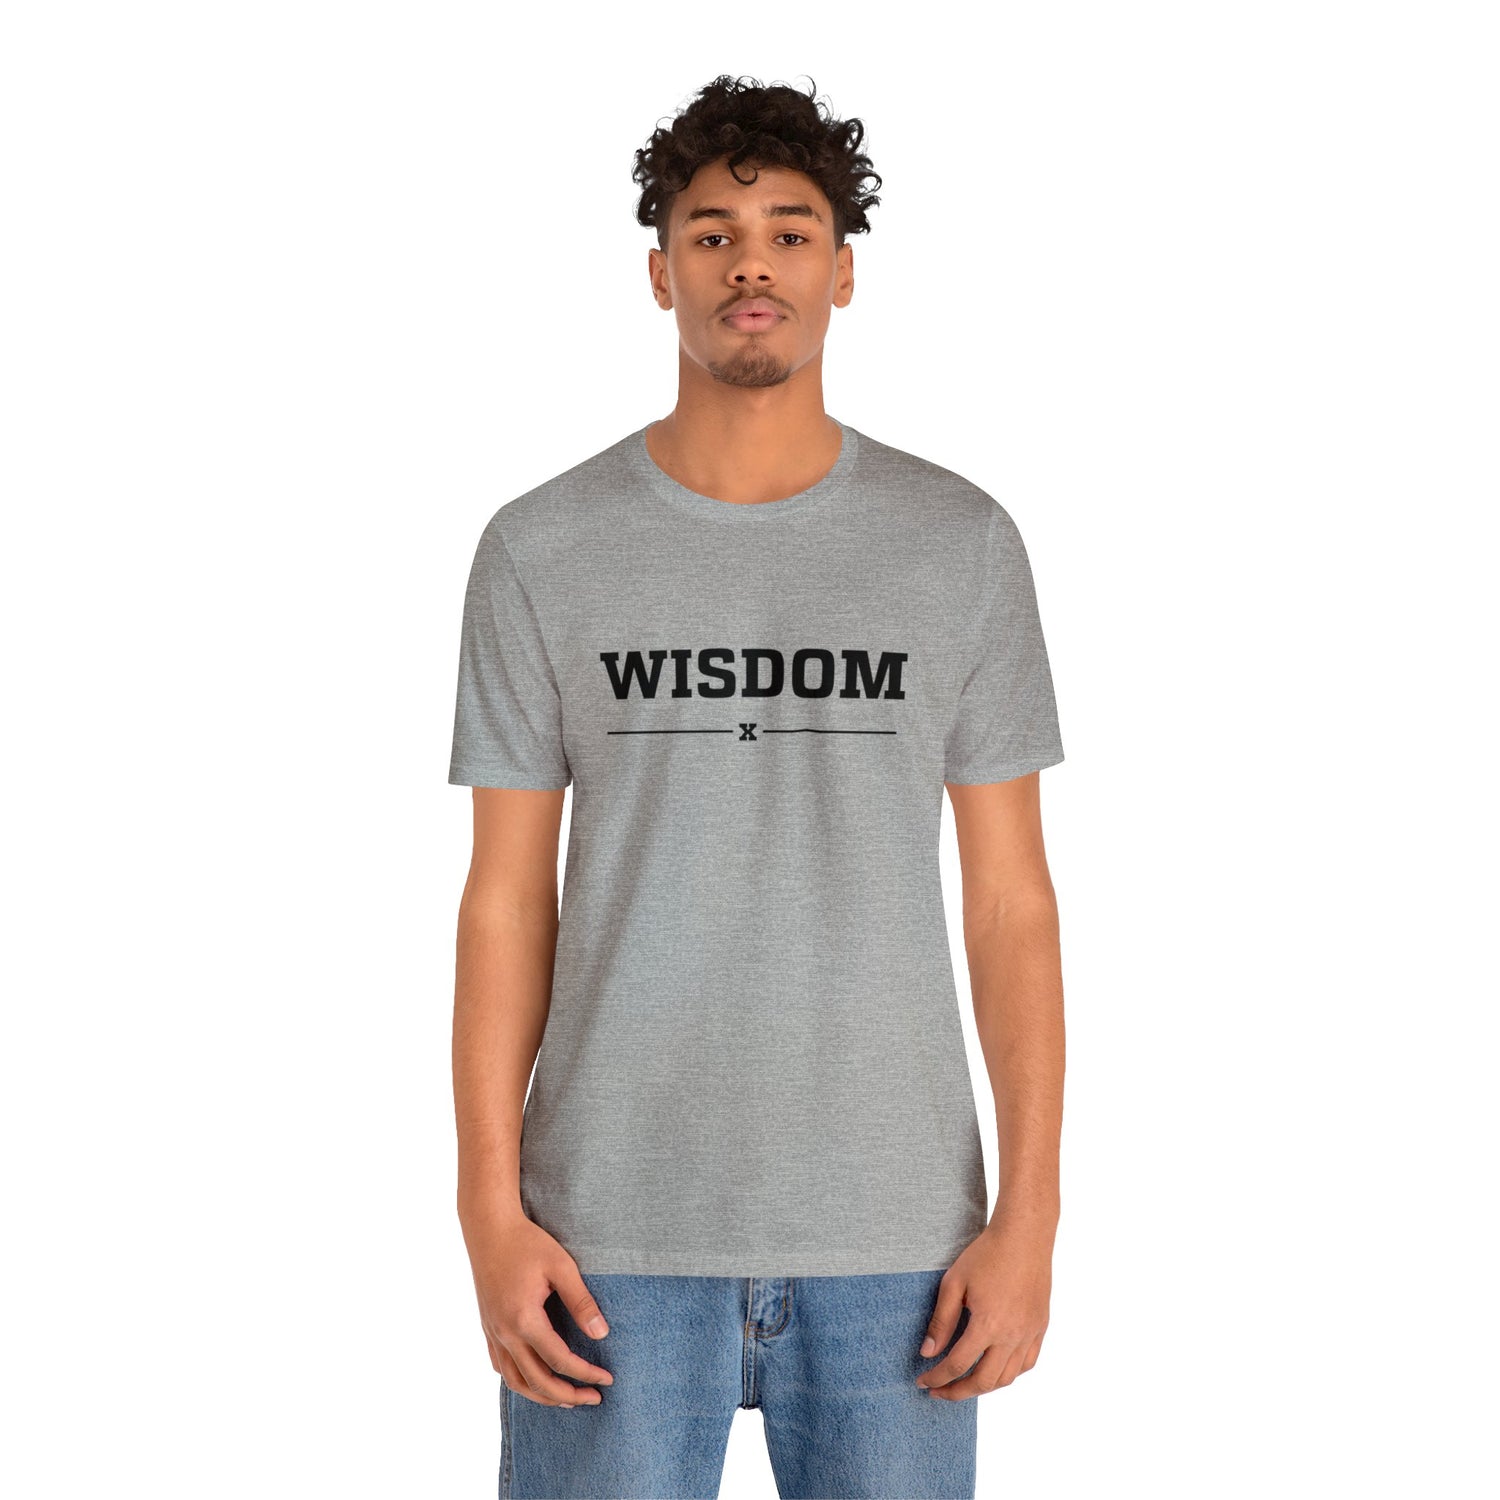 Tee-shirt de sagesse